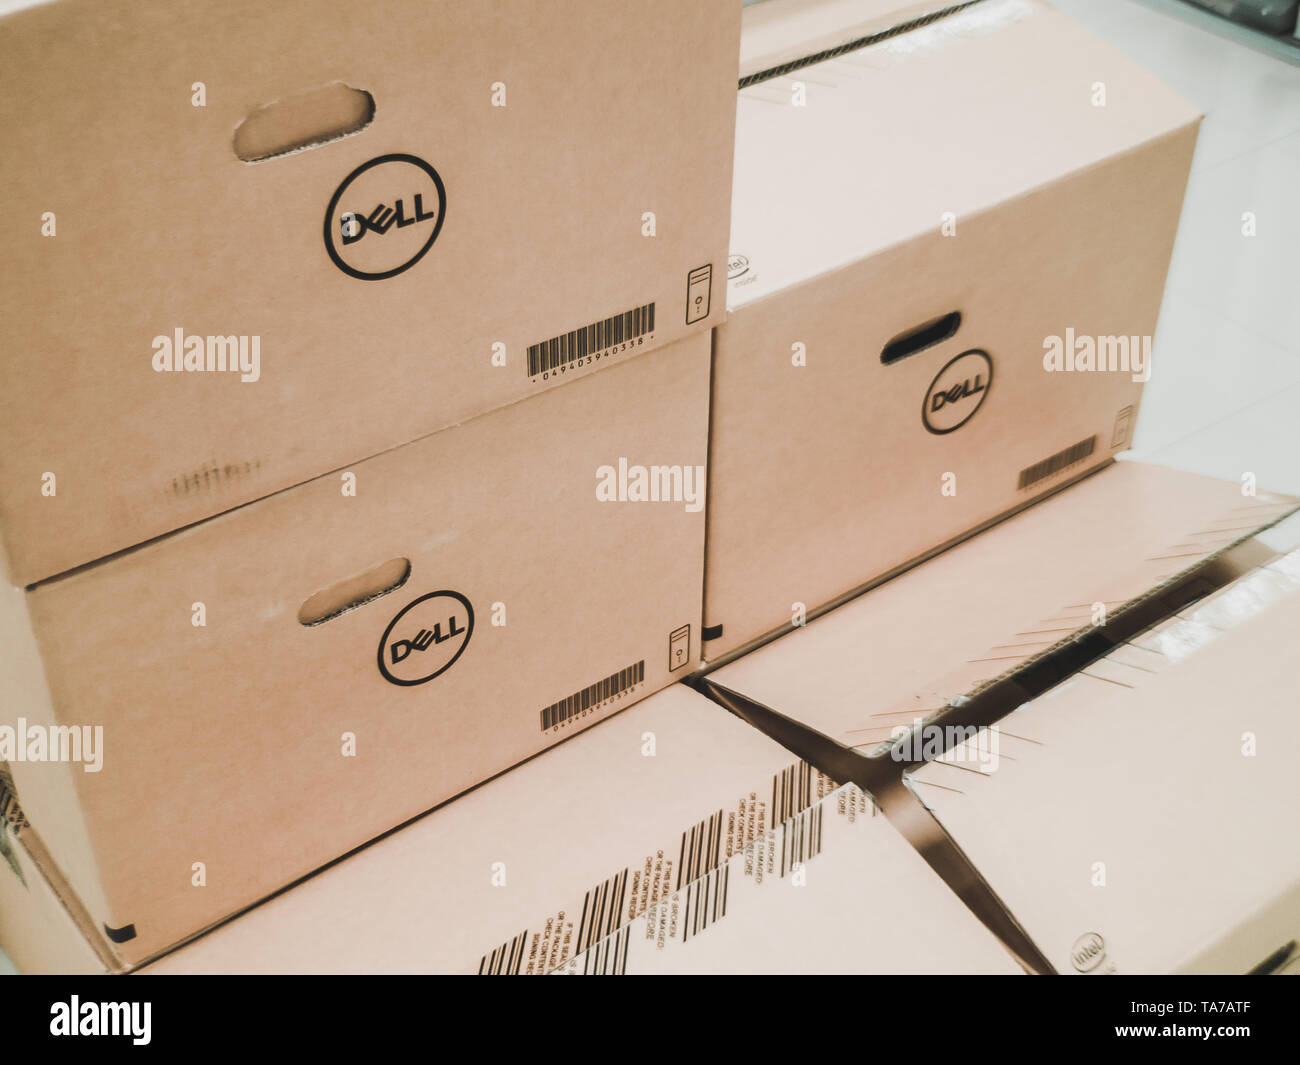 Samut Prakan, Thailand - February 8, 2019: Dell Cardboard box package  containing Dell Optiplex Desktop PC Stock Photo - Alamy